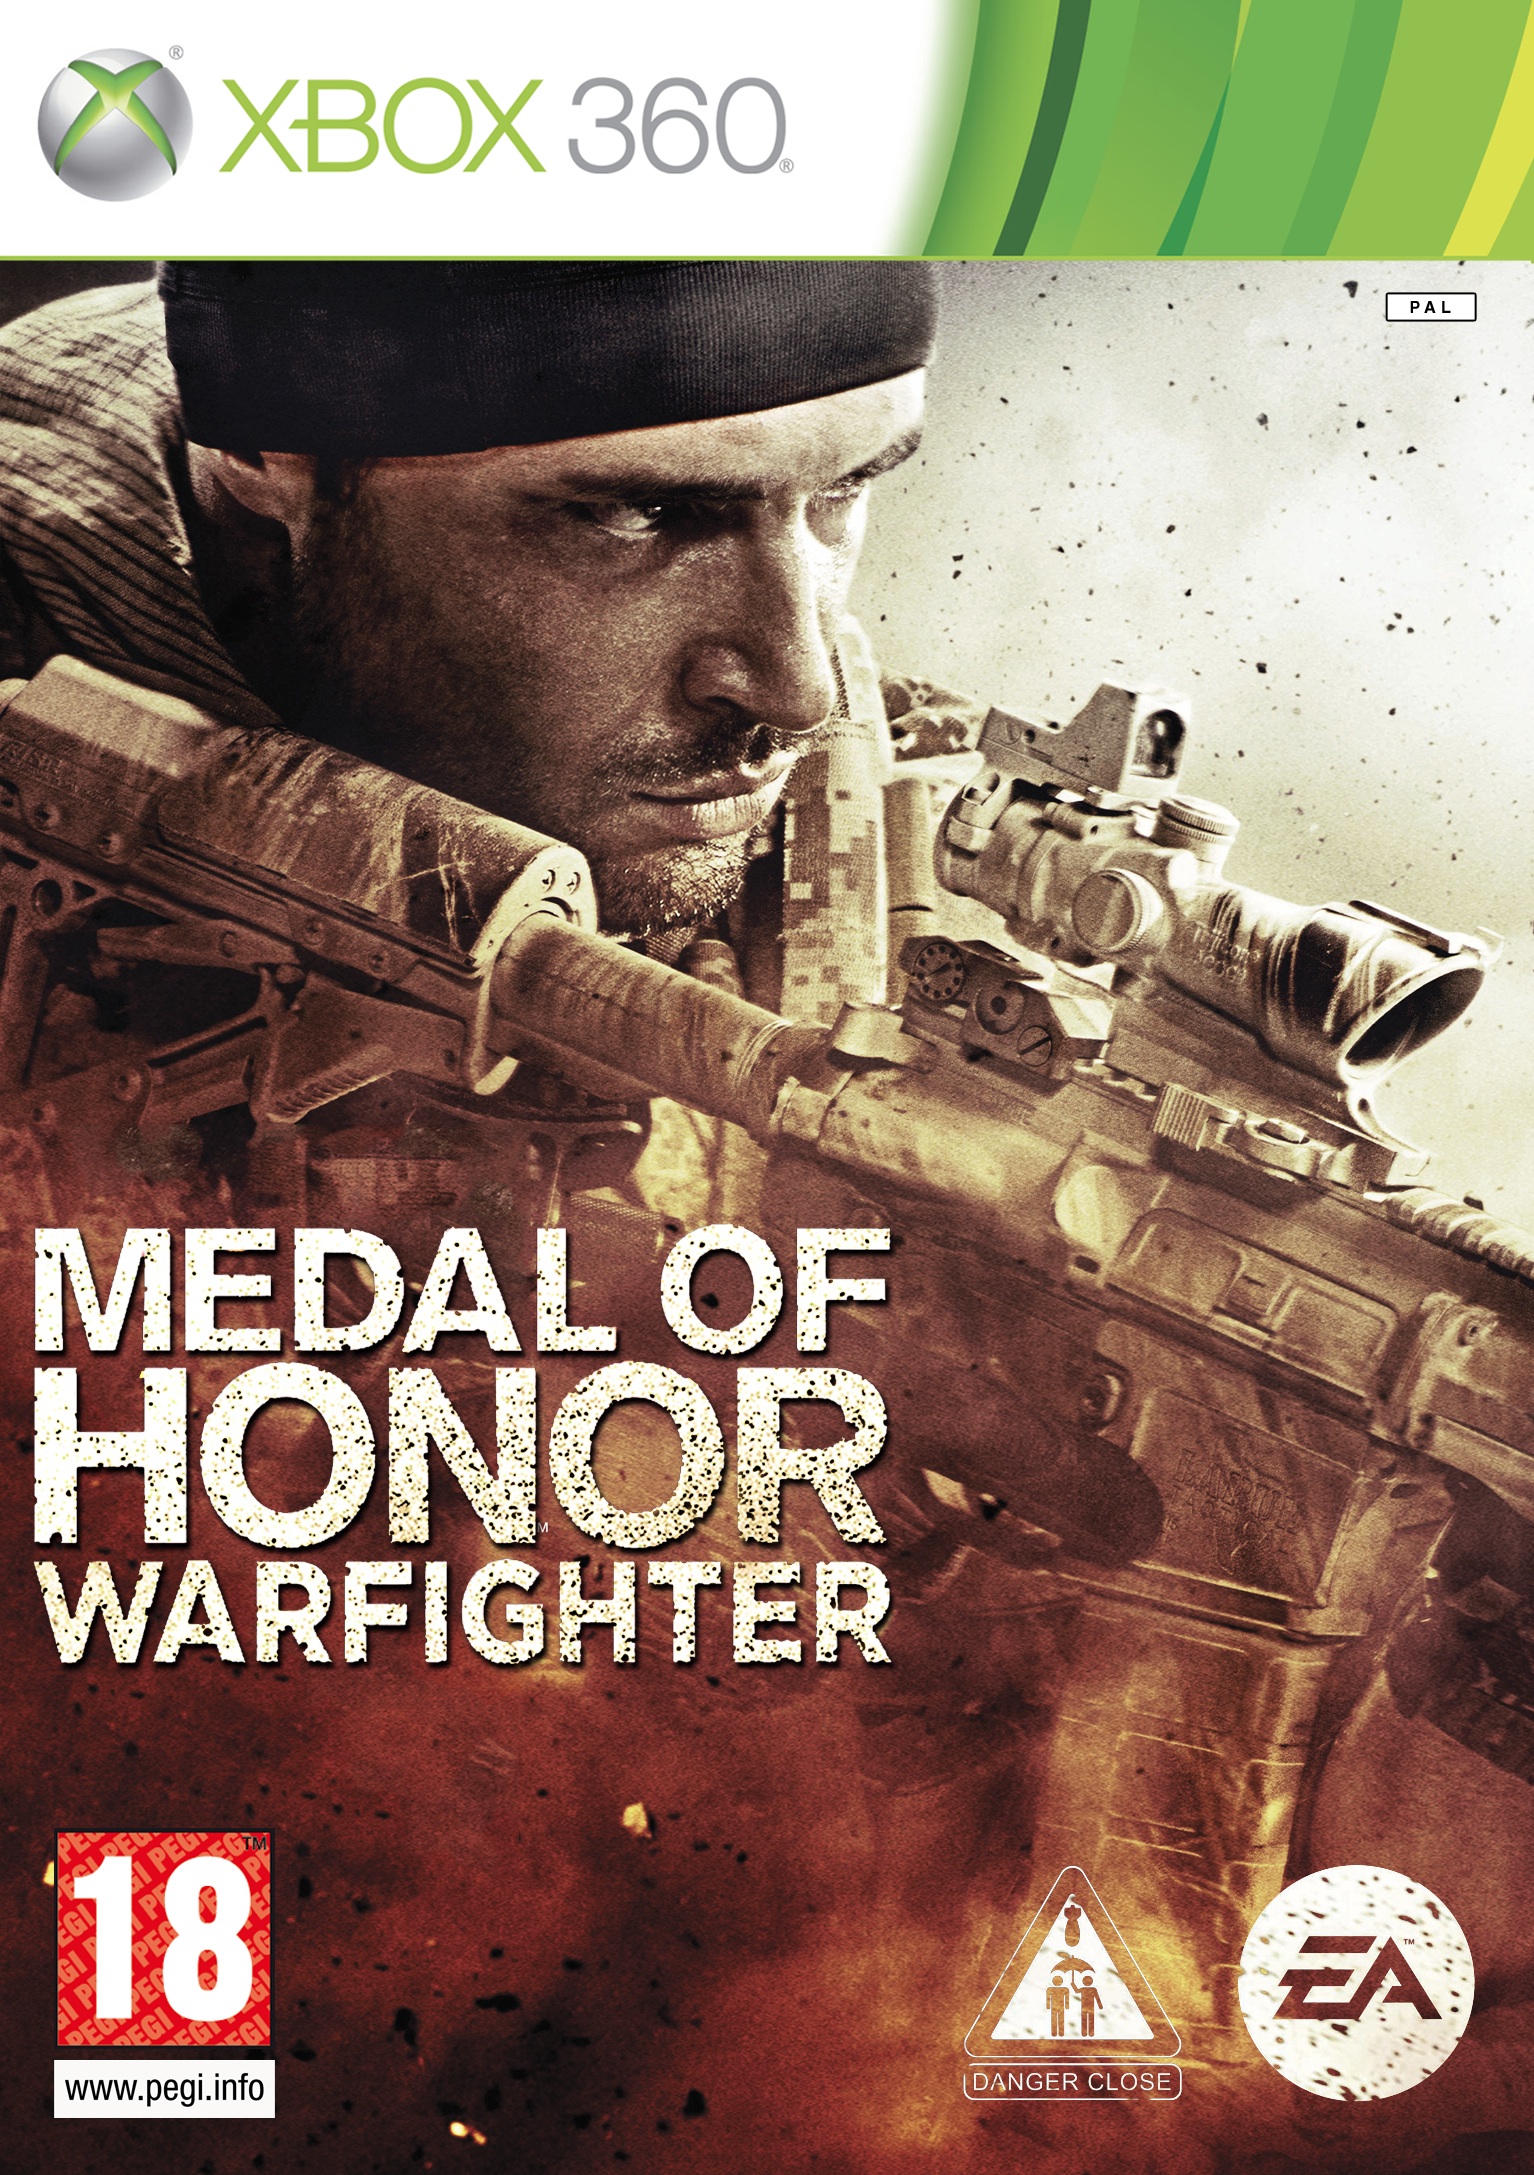 Medal of honor xbox 360. Медаль за отвагу на хбокс 360. Medal of Honor: Warfighter Xbox 360 обложка. Medal of Honor Warfighter Xbox 360 Disk.